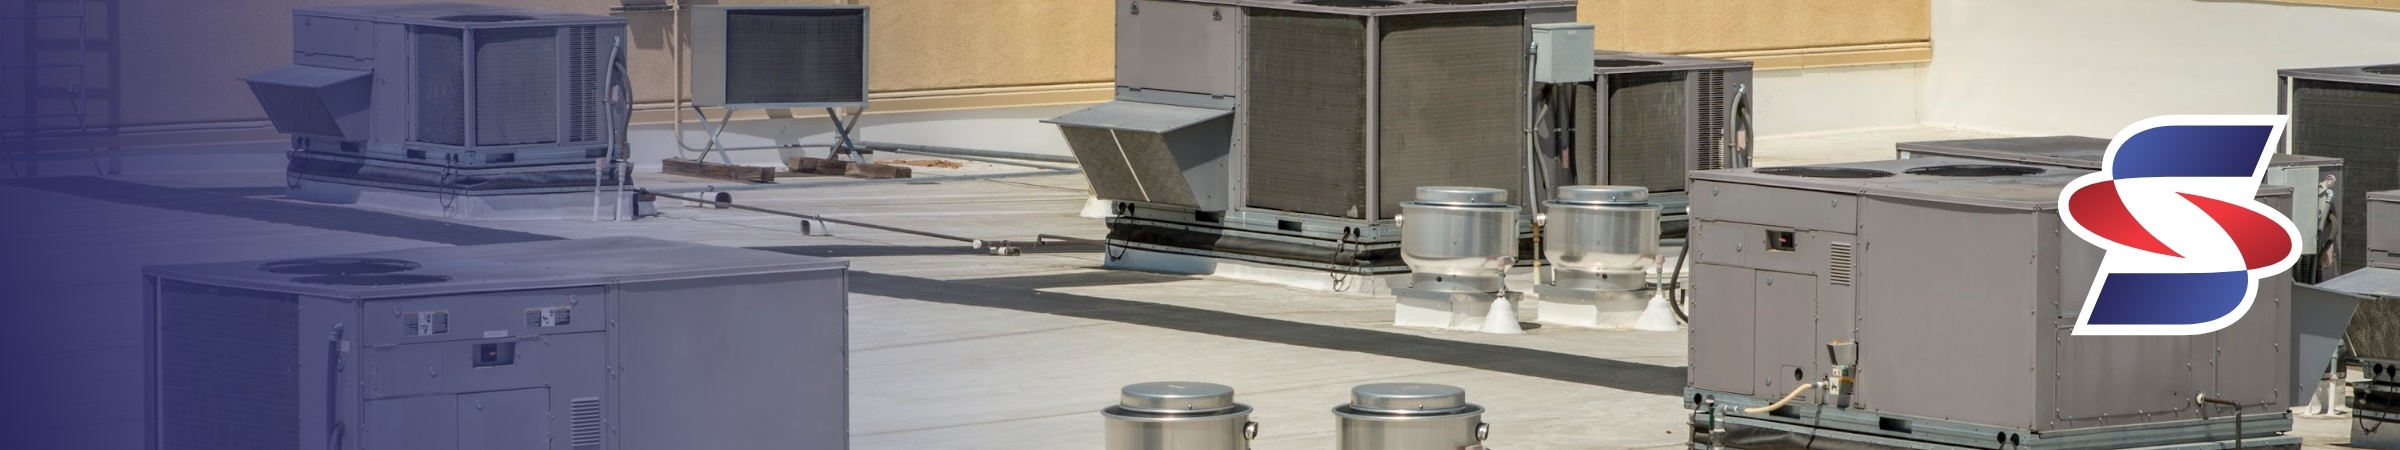 Commercial HVAC Services - Schmitt Refrigeration